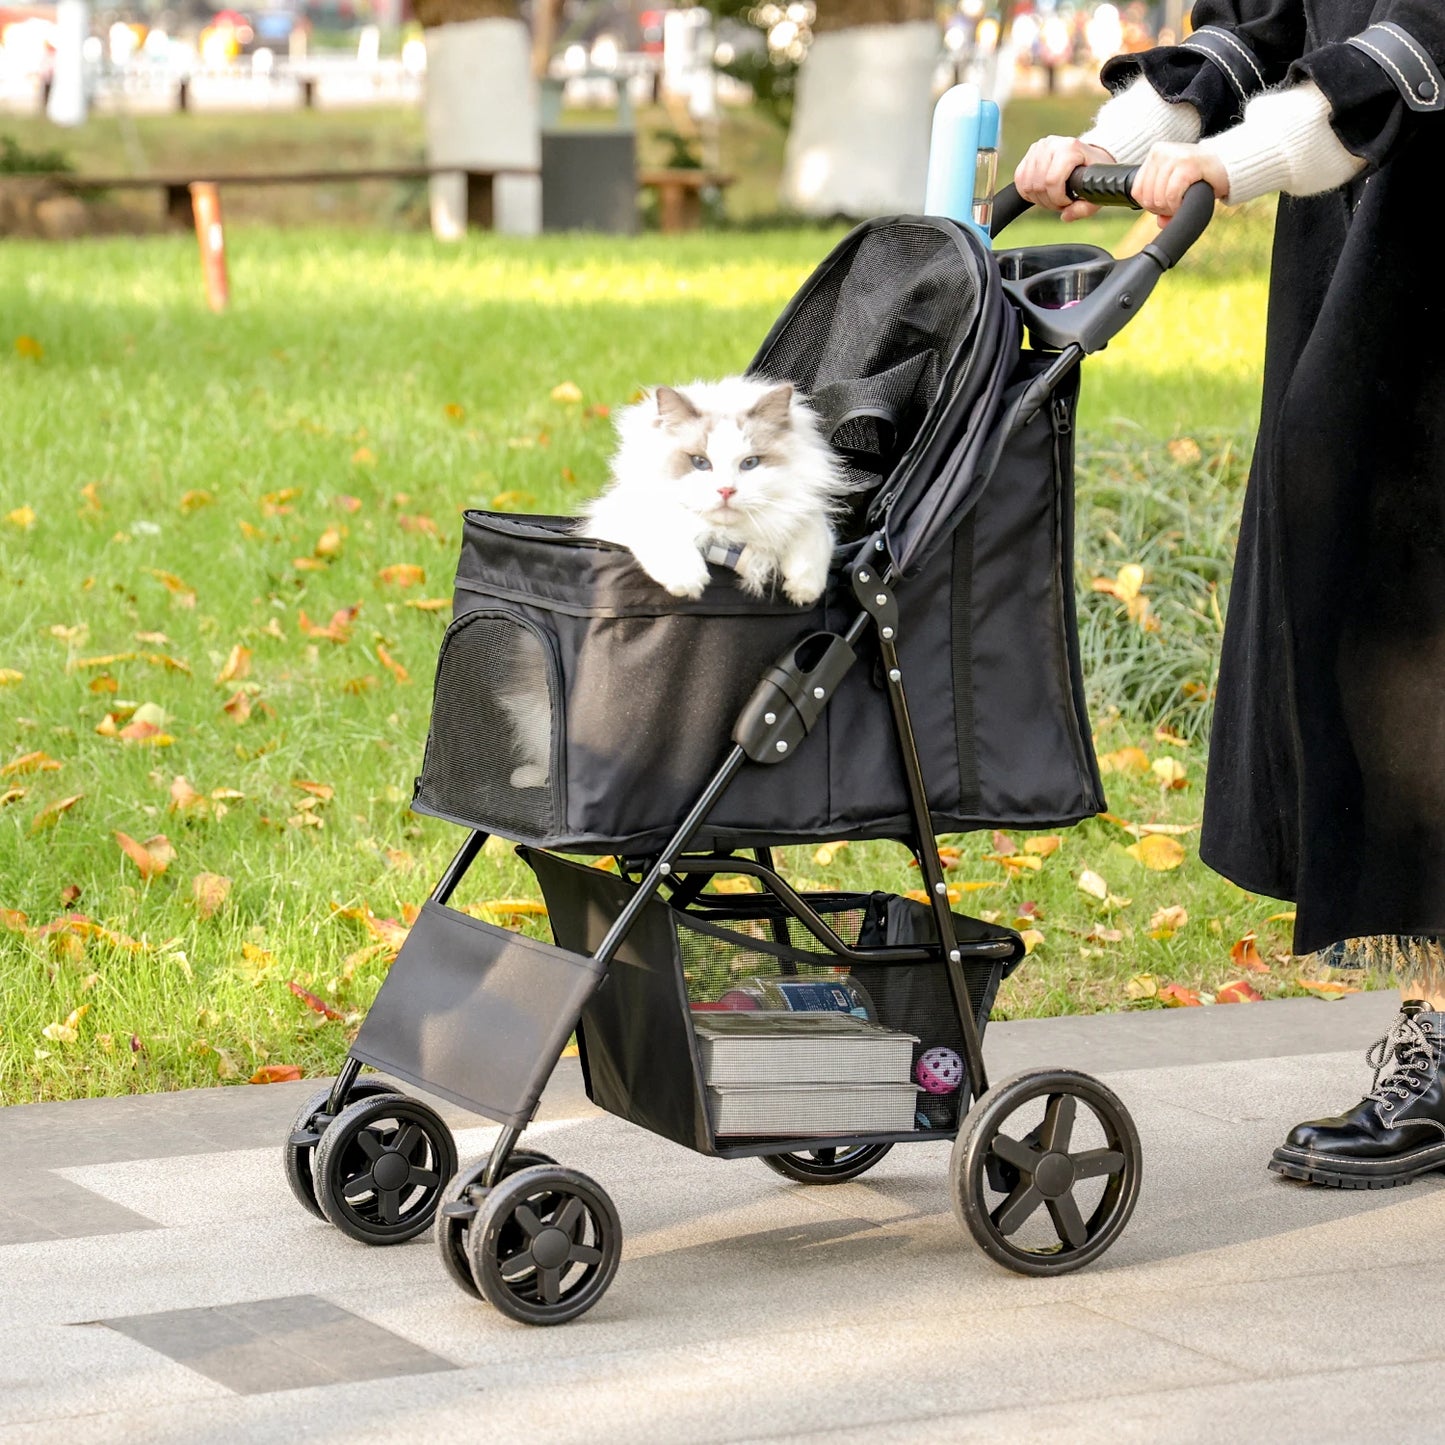 Carrier Stroller for Pets